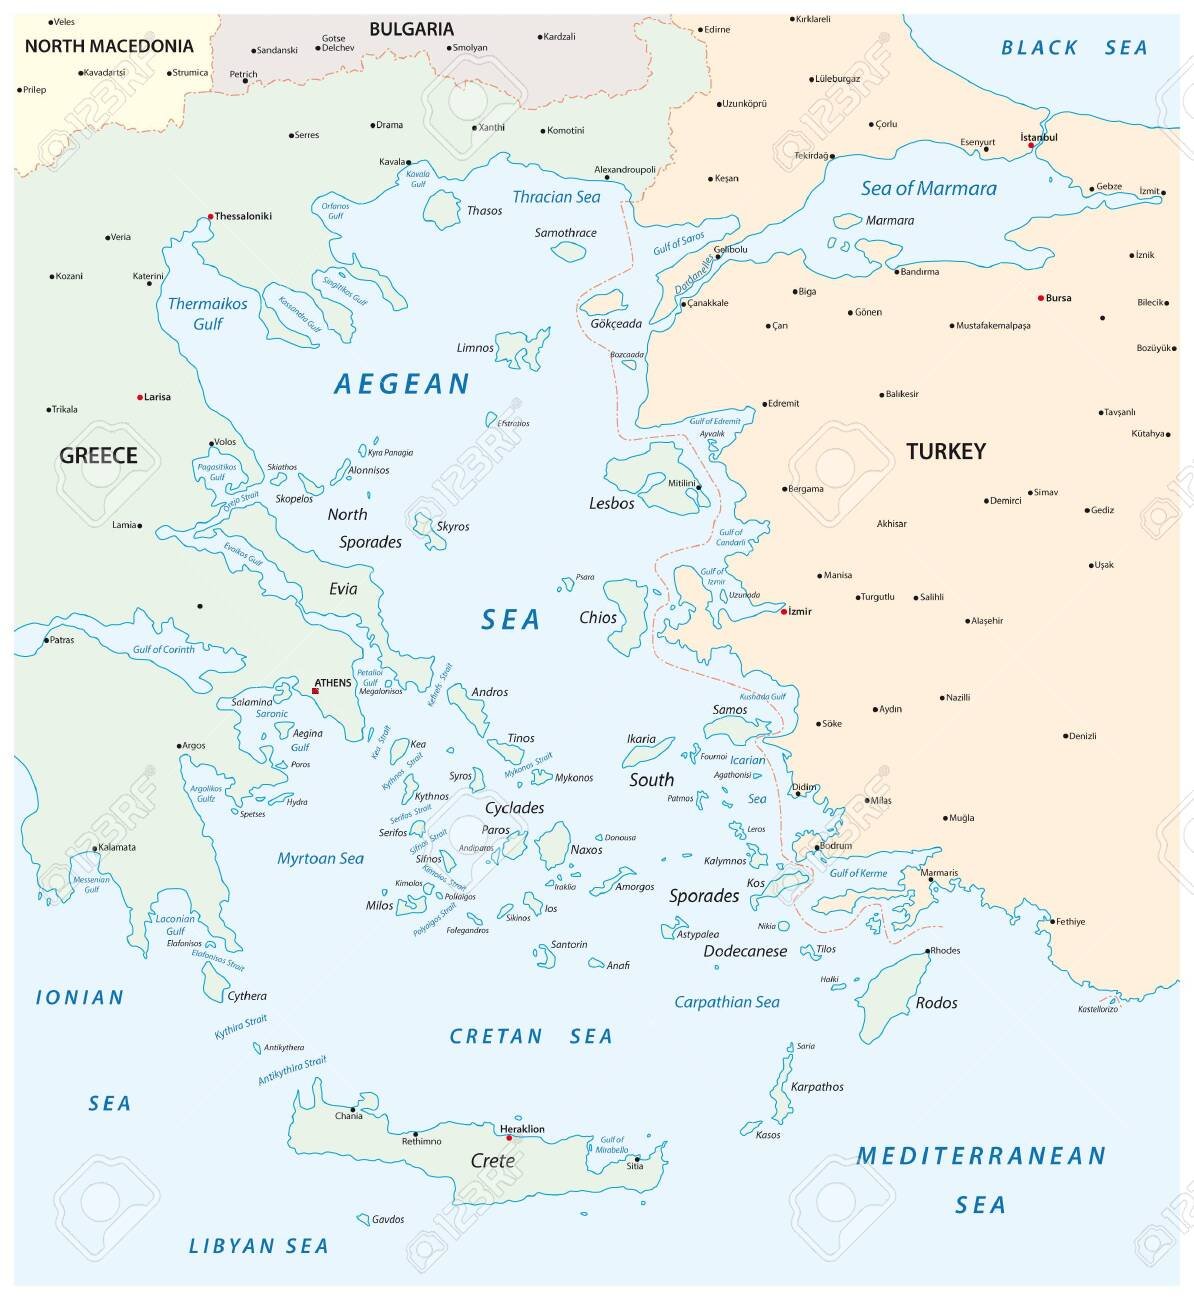 эгейское море на карте